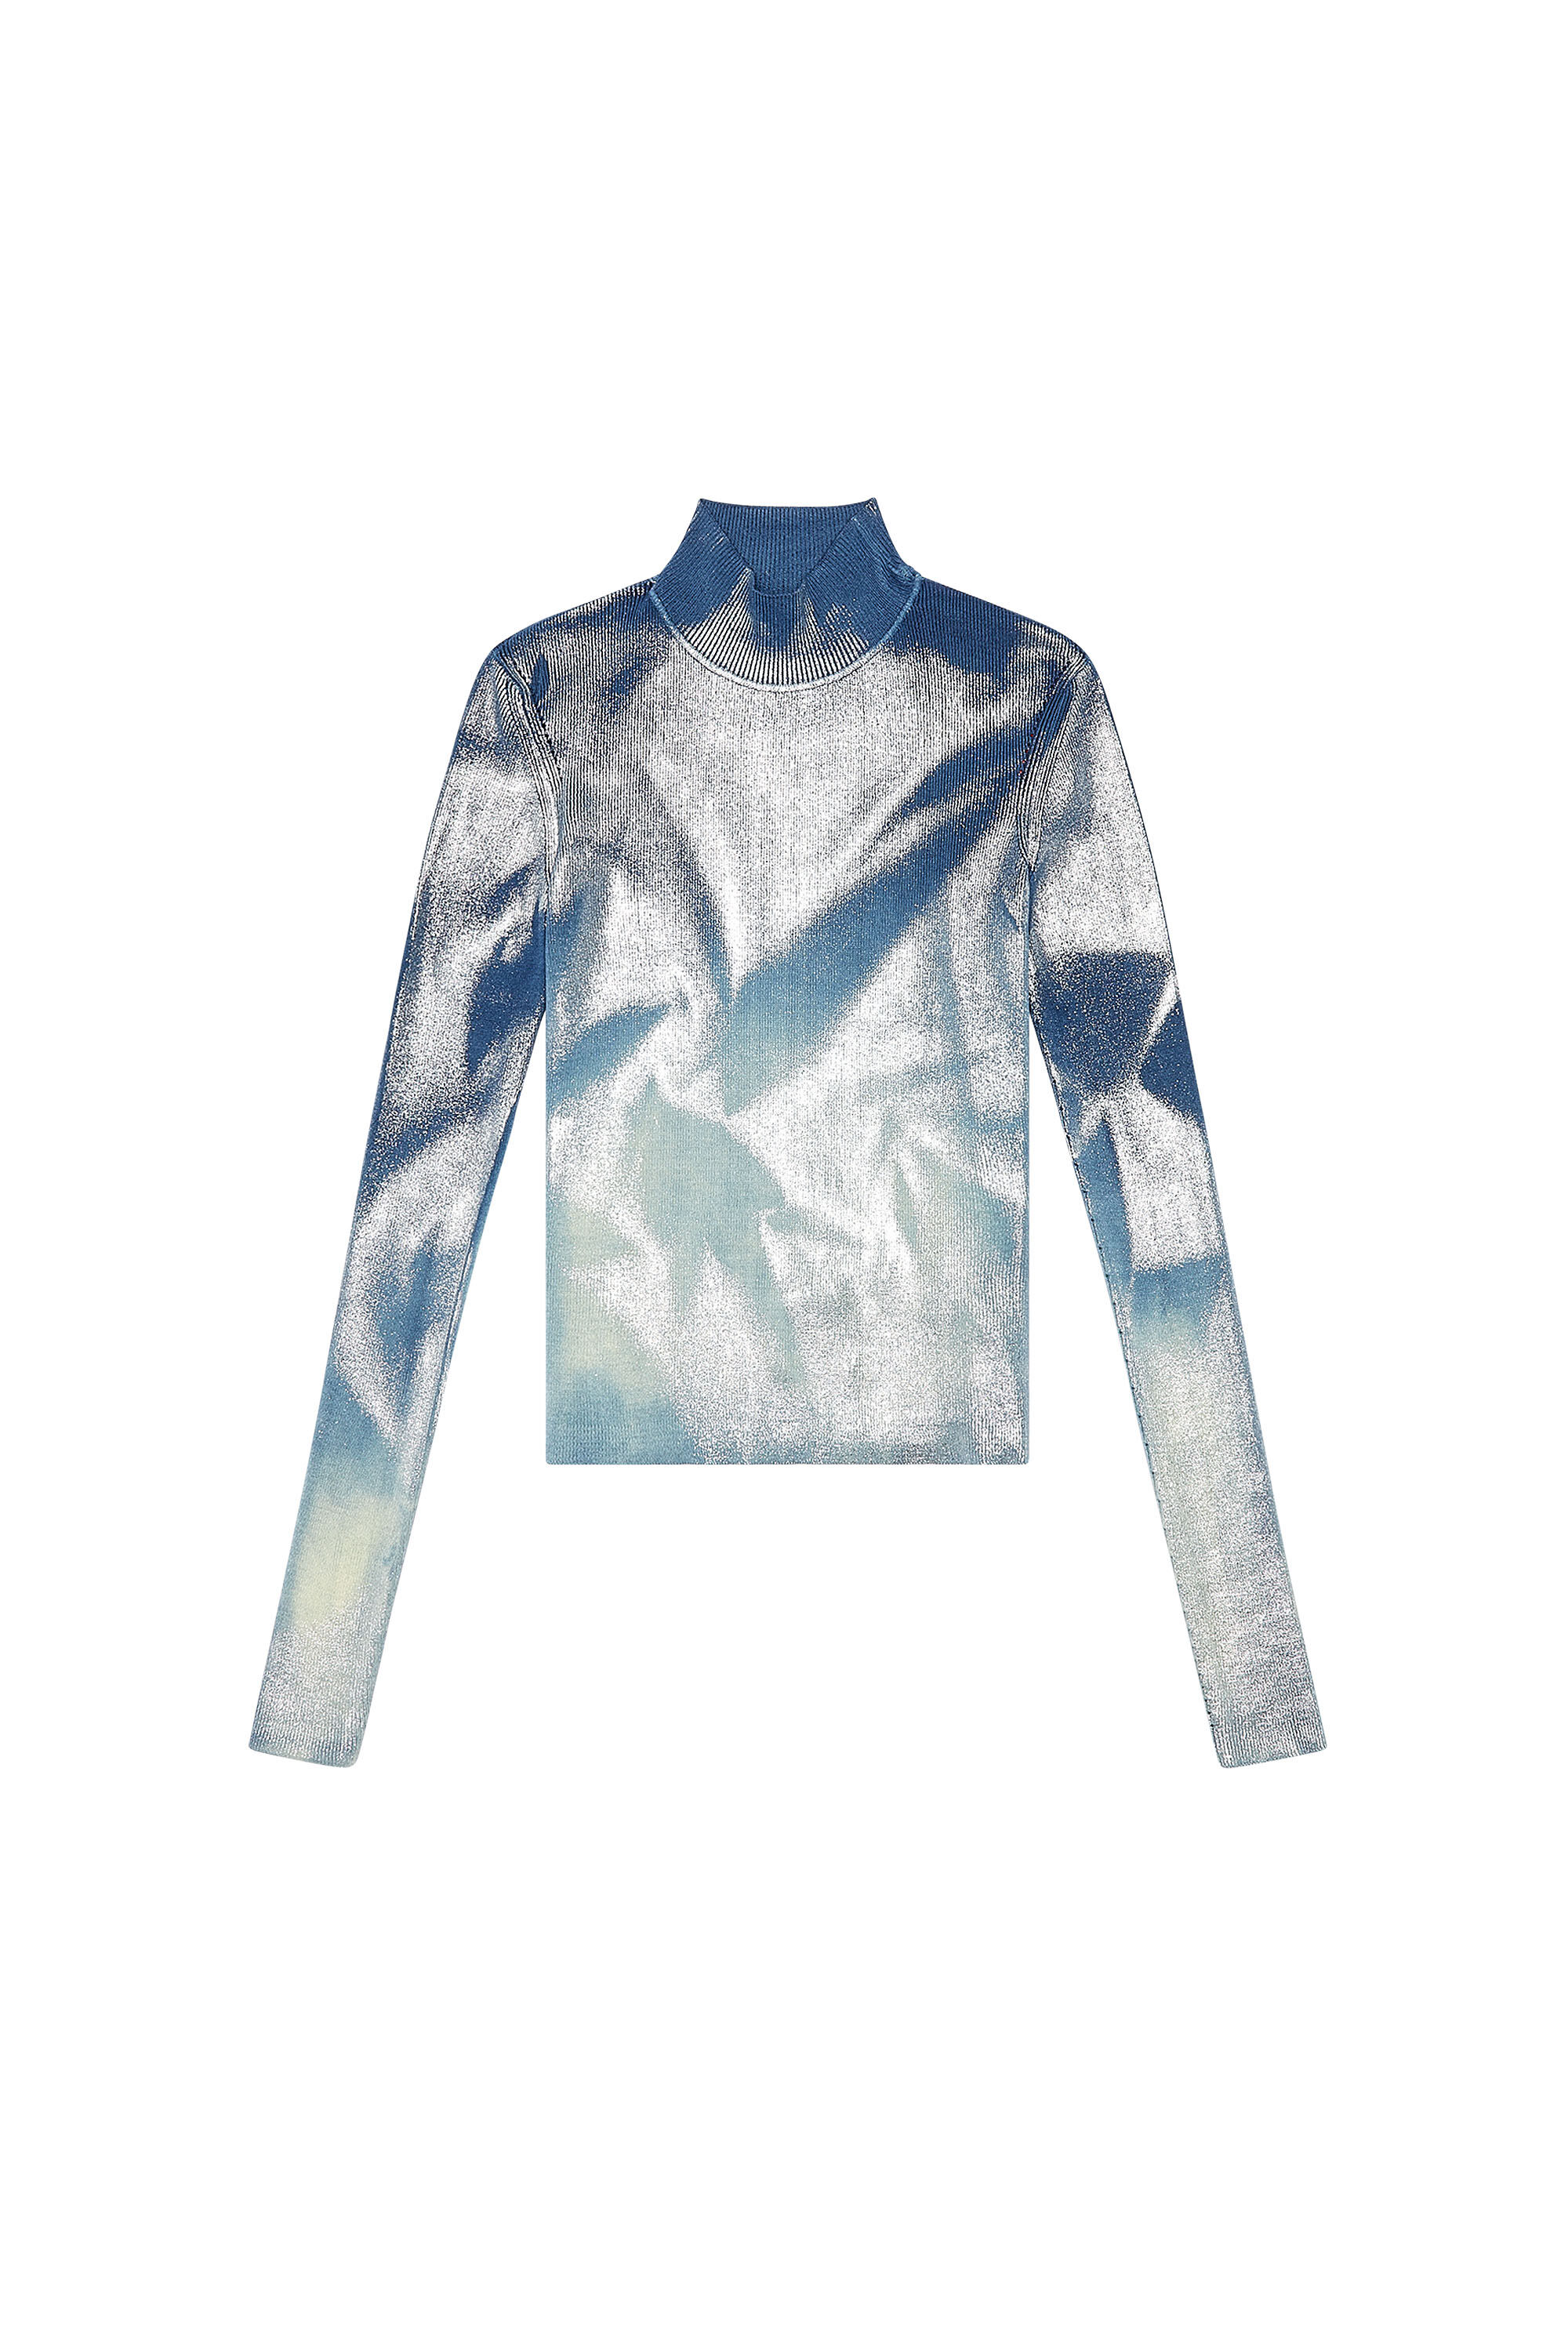 Diesel - M-ILEEN, Woman Knit top with metallic effects in Blue - Image 2